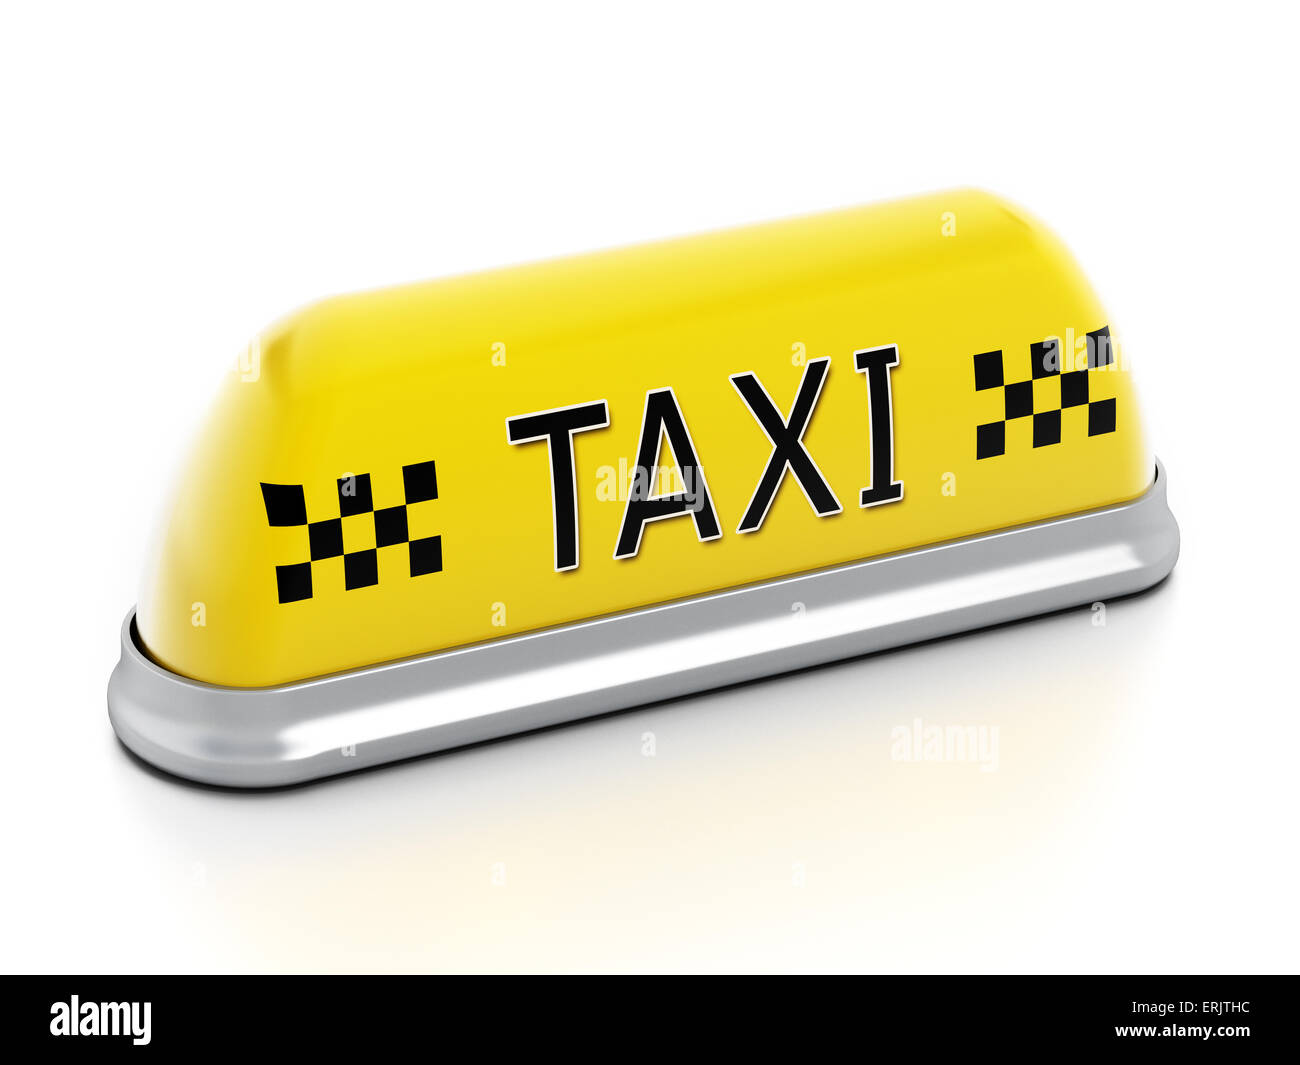 Auto Dach Licht Taxi Lampe Topper Taxi Taxi Toppers Taxi Dach Schilder Taxi  Kontrollleuchten Taxi Schild Licht